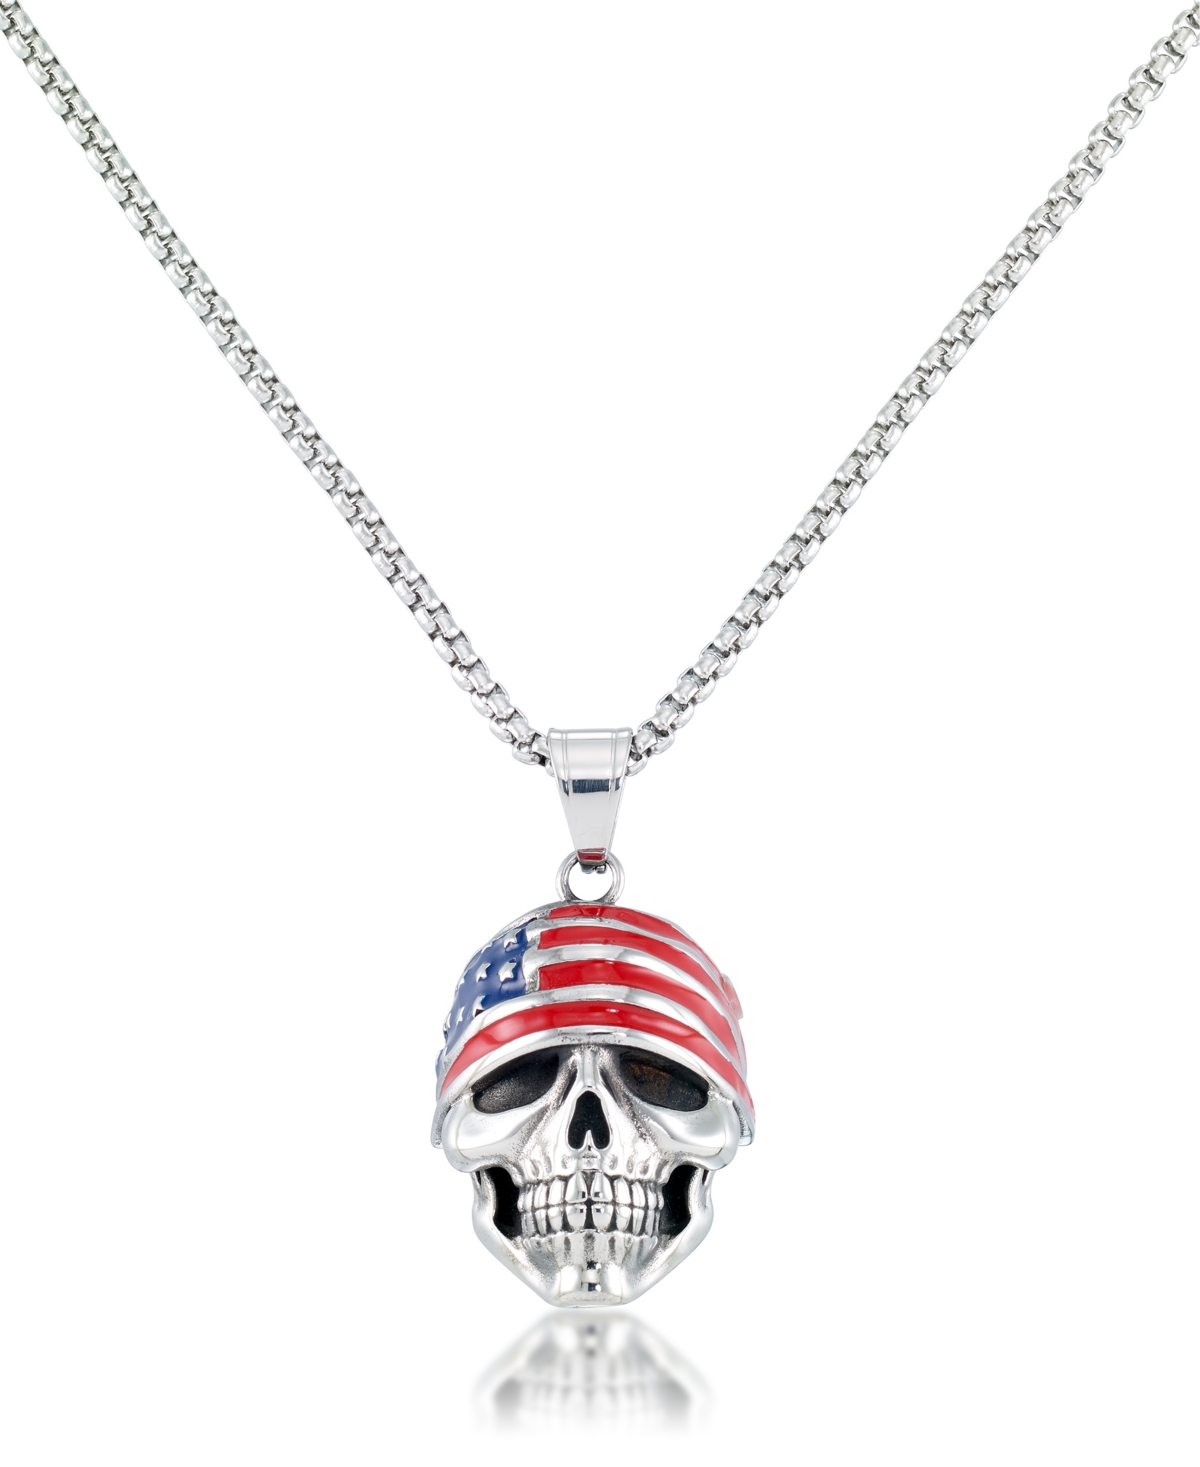 Men's Skull 24" Pendant Necklace in Stainless Steel - Stainless Steel